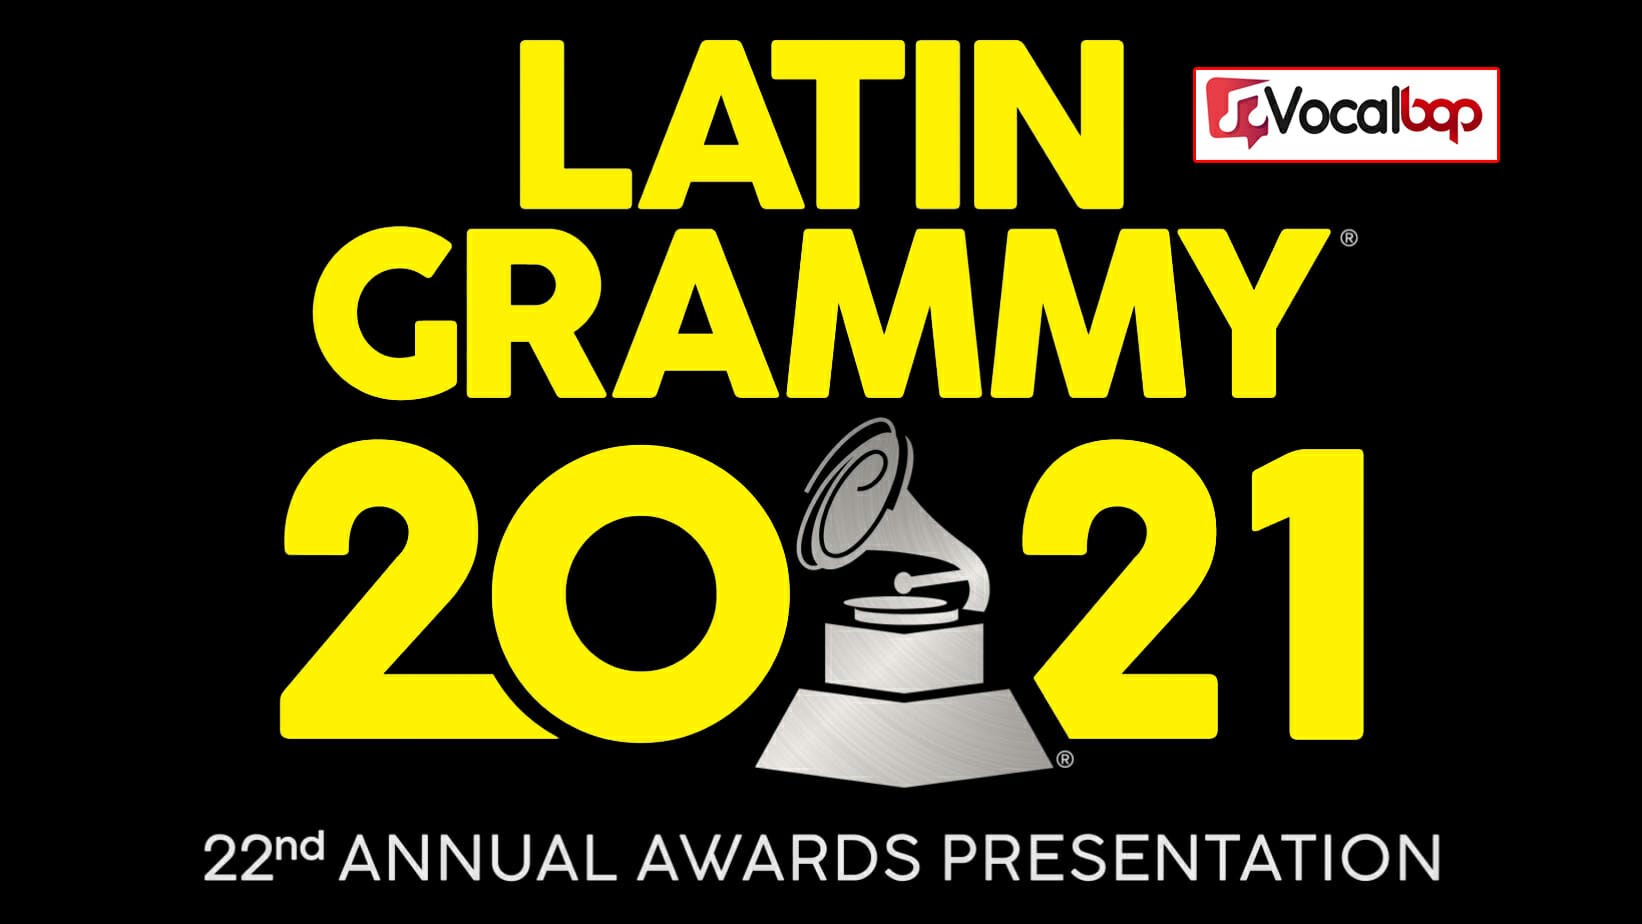 Latin Grammy Awards 2021 Live Stream